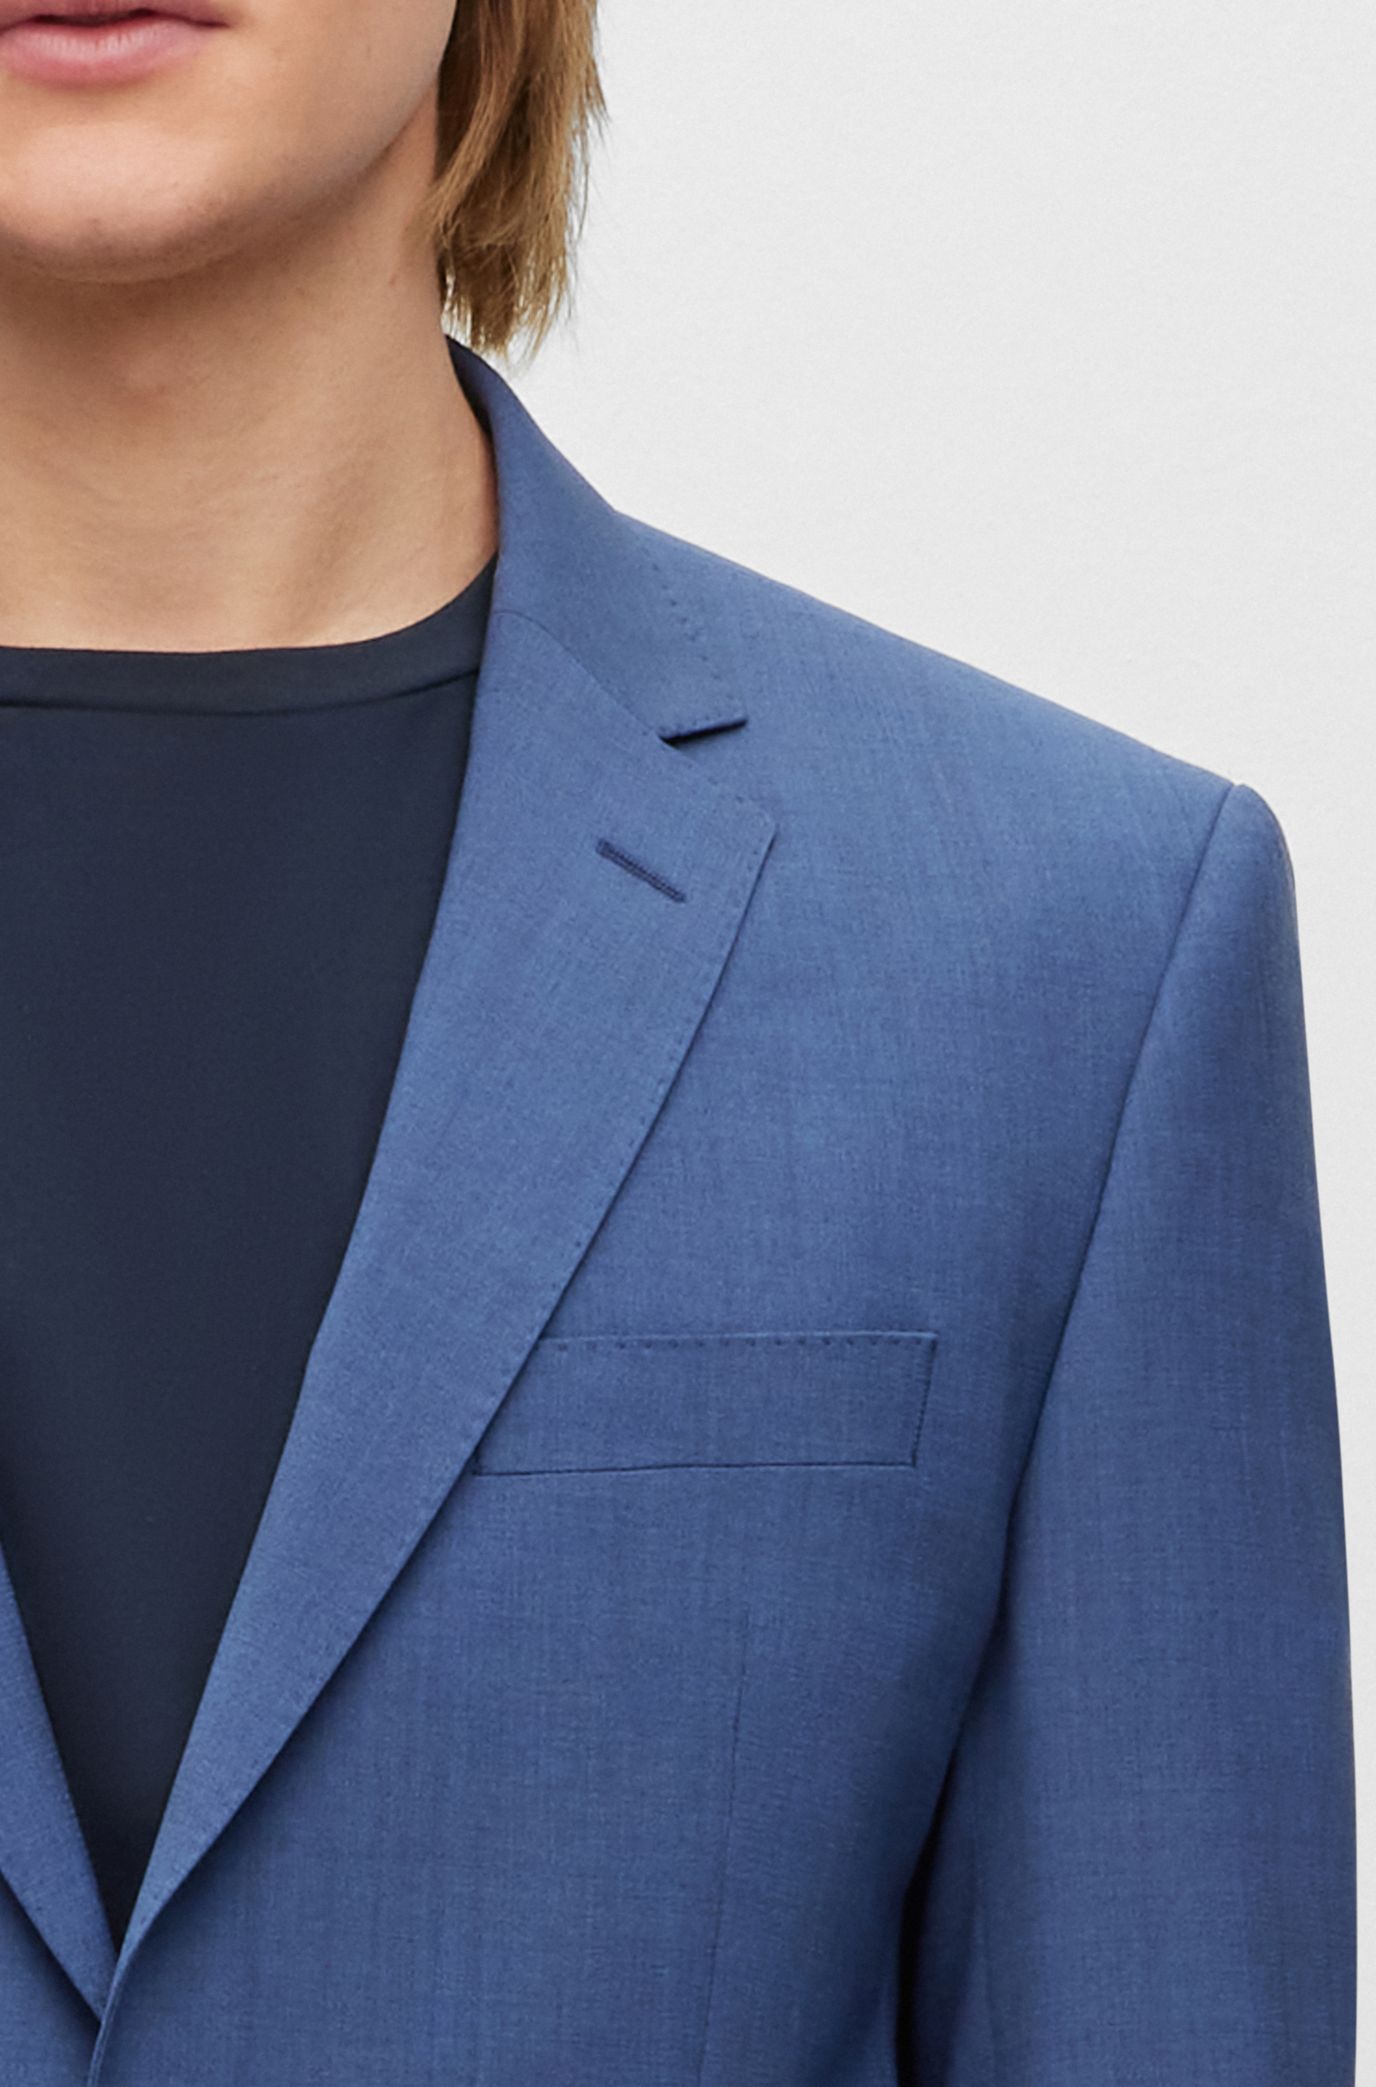 Men's Grey 2 Piece Business Suit Slim Fit Double Breasted Dinner Wear Suit  -  Sweden